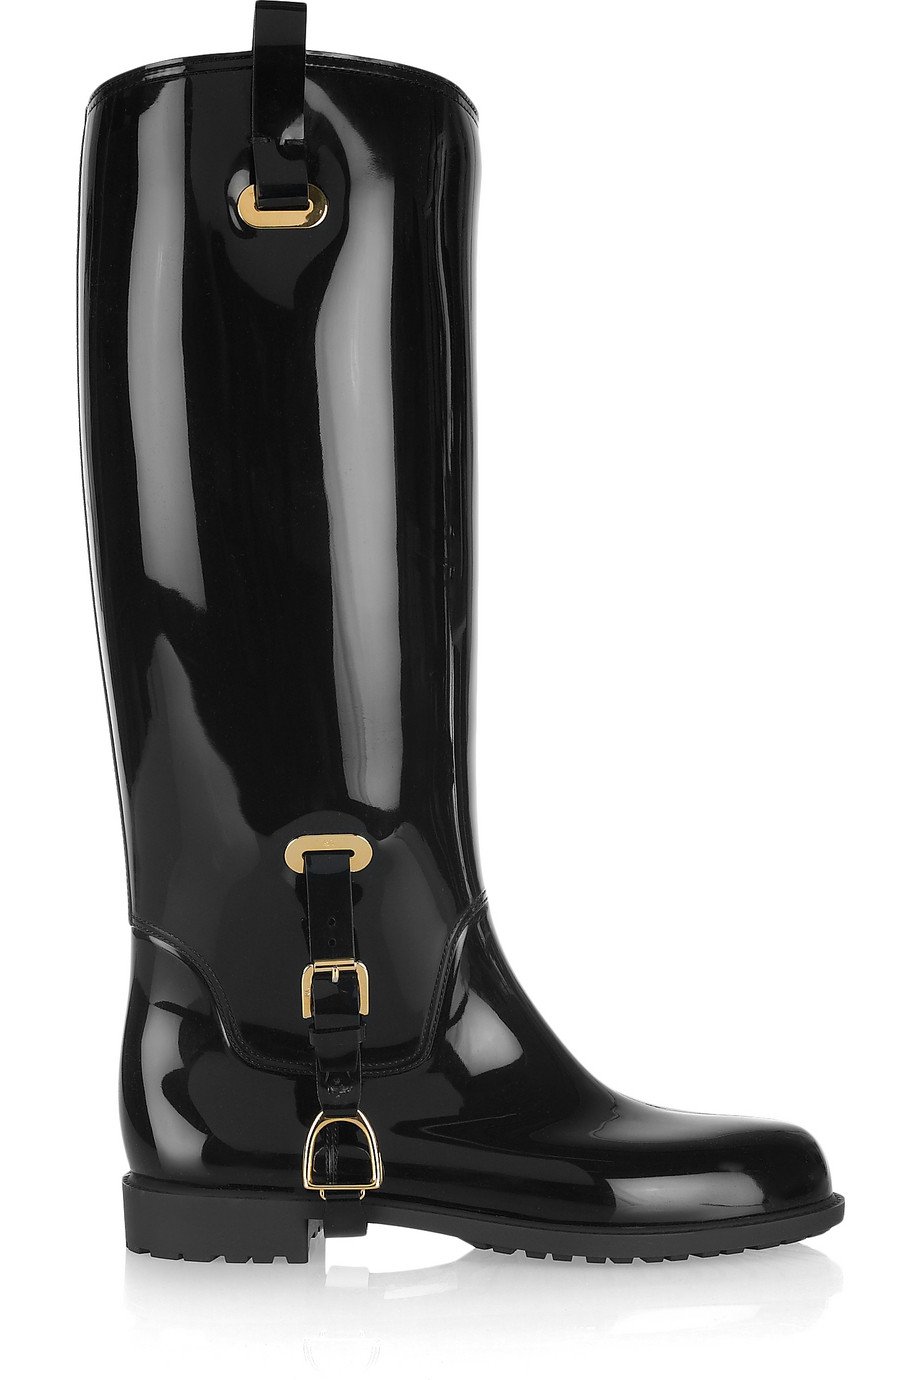 Ralph lauren collection Odette Rubber Rain Boot in Black | Lyst